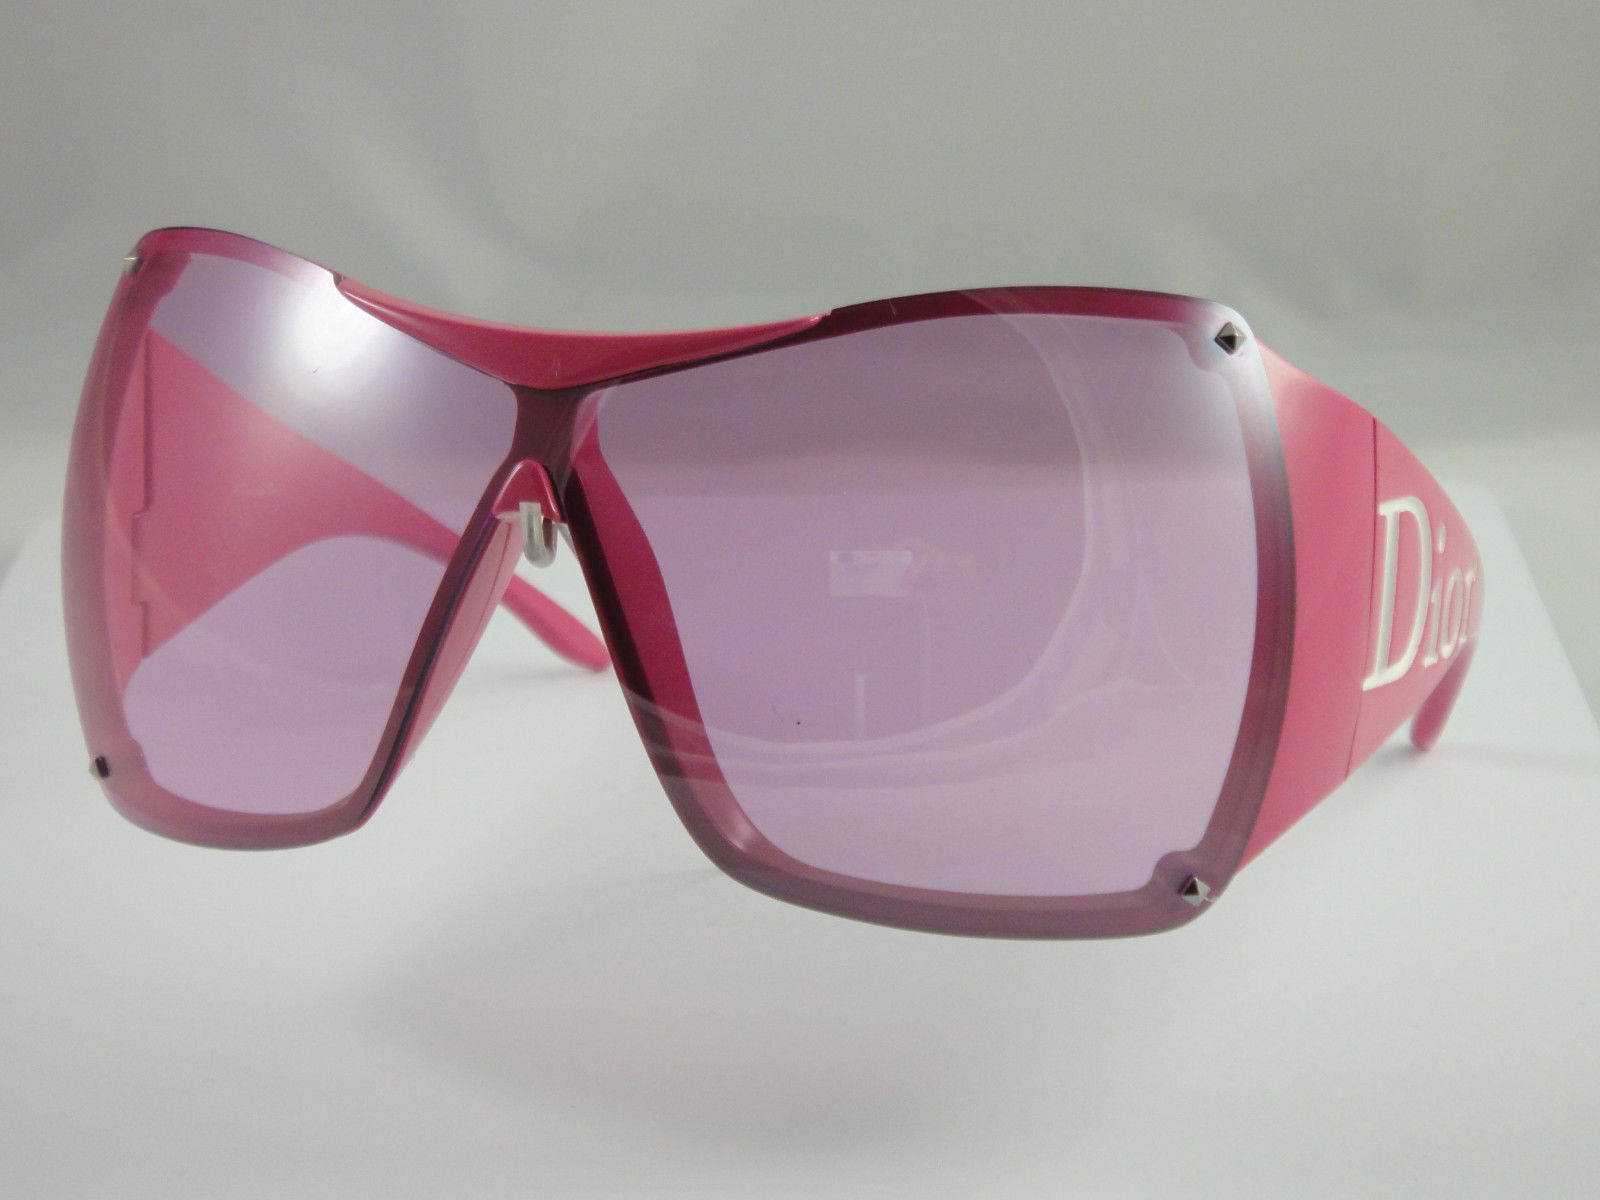 dior overshine sunglasses, OFF 78%,www 